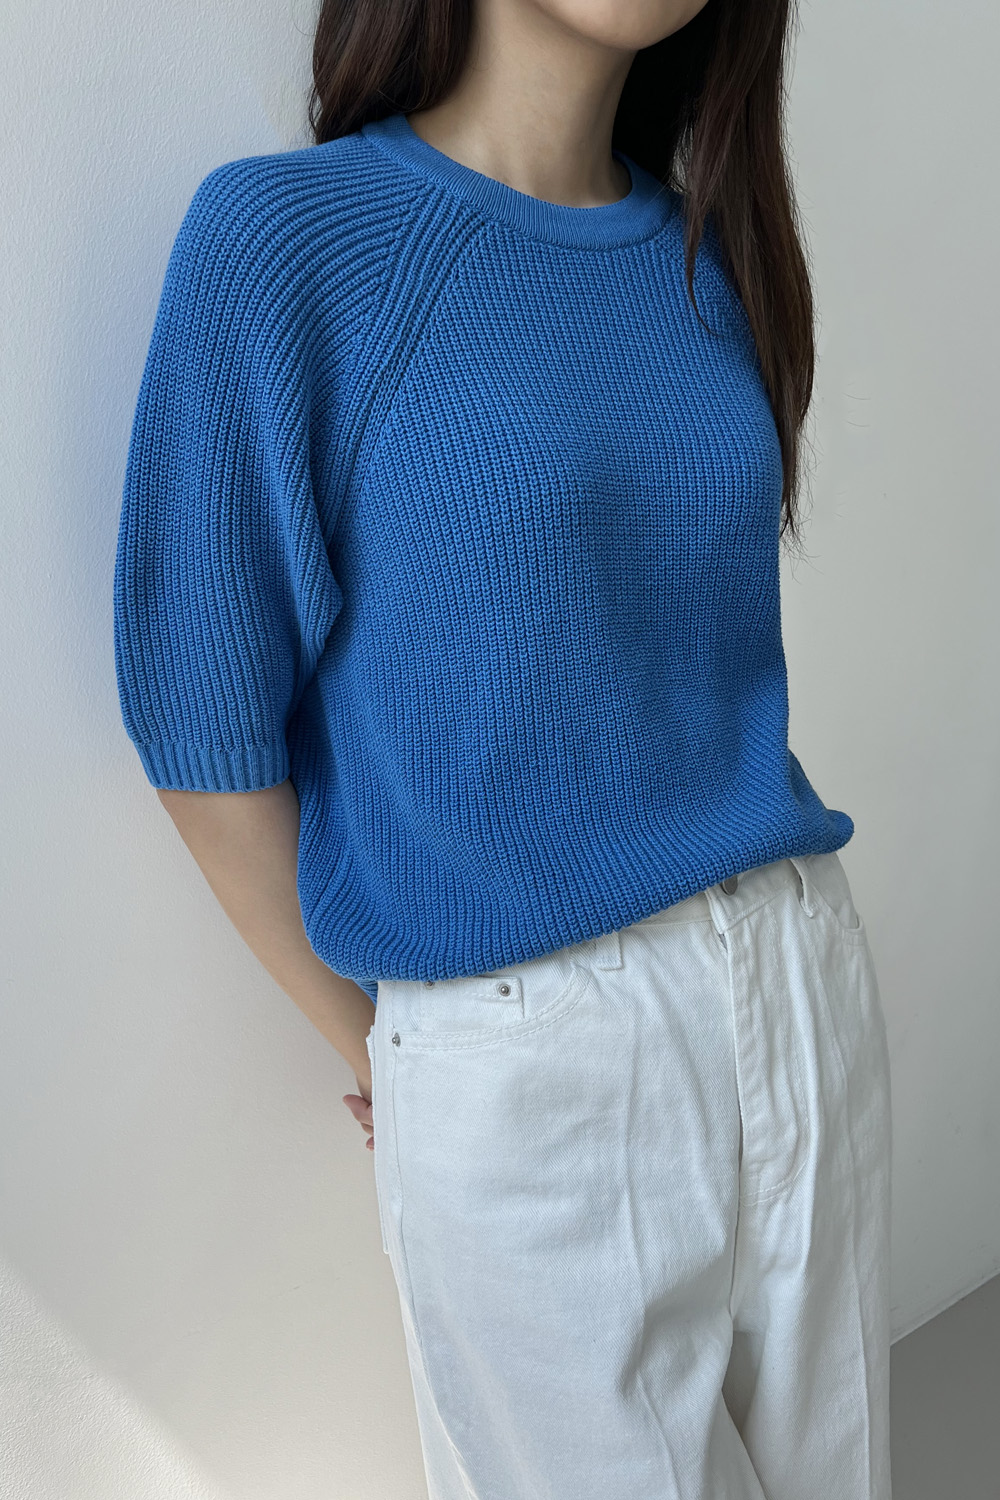 [40%] Allen raglan knit_azure blue